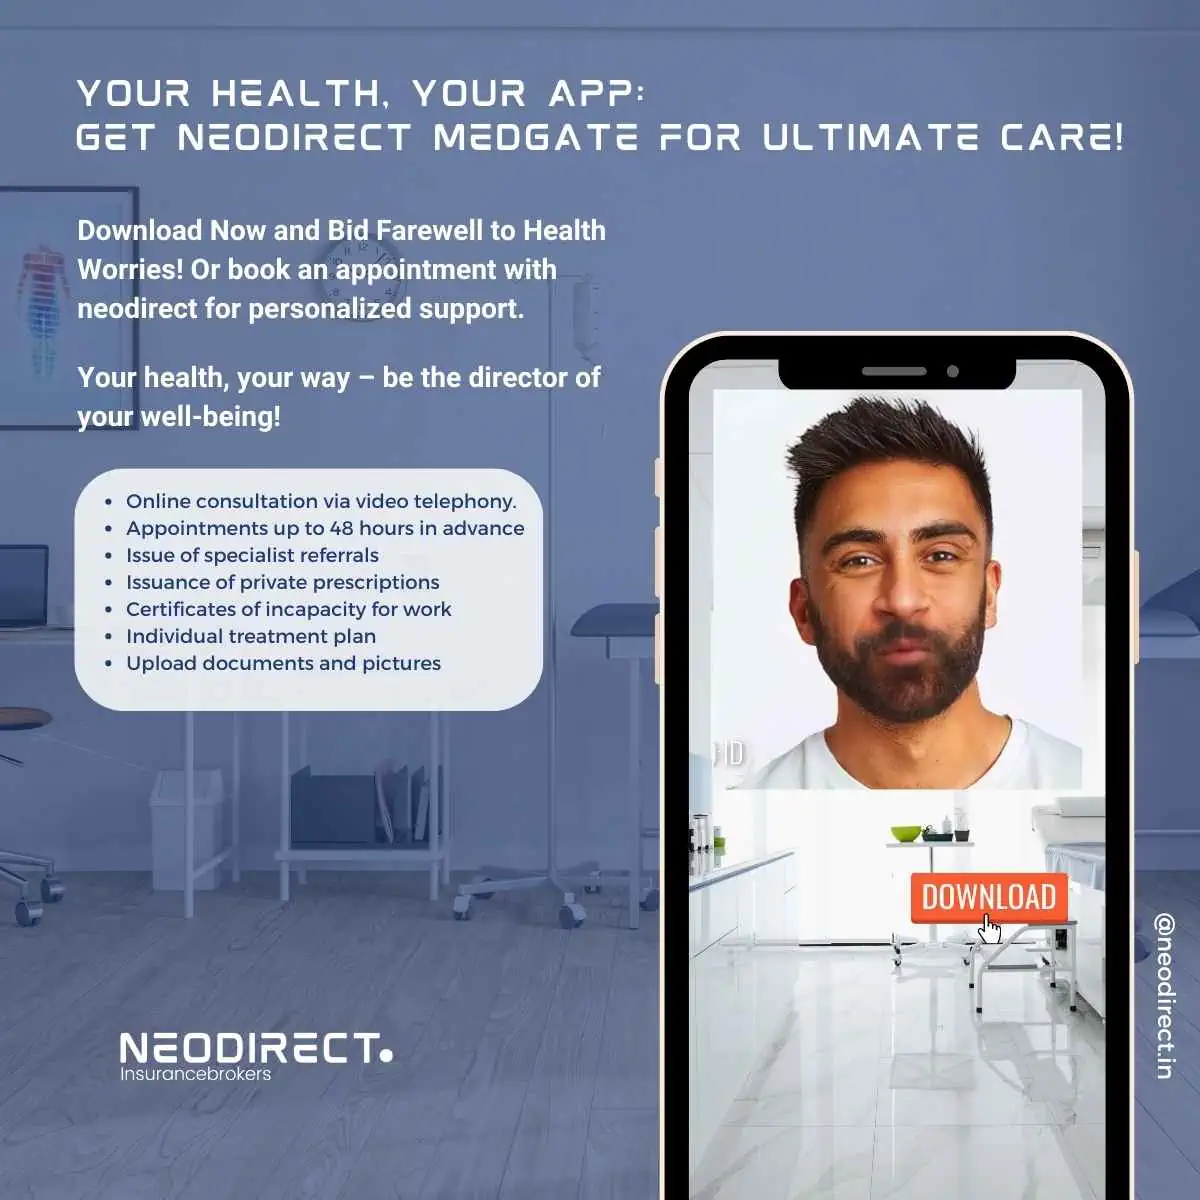 Telemedicin: Medgate app